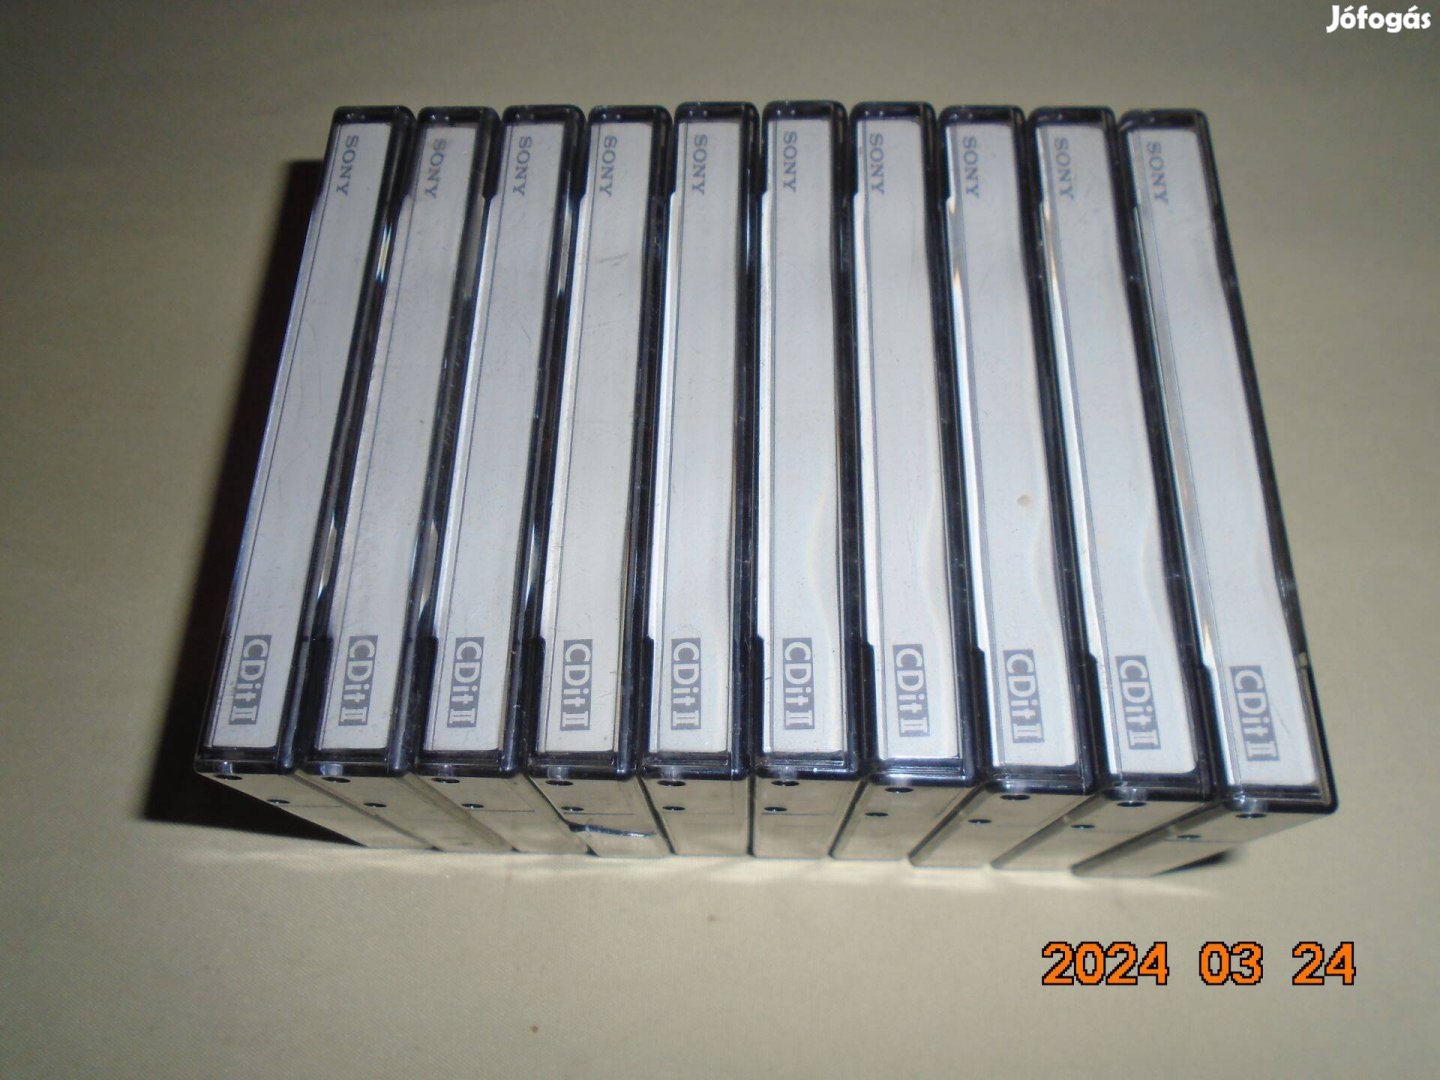 Sony Cdit chrome kazetta 10 db